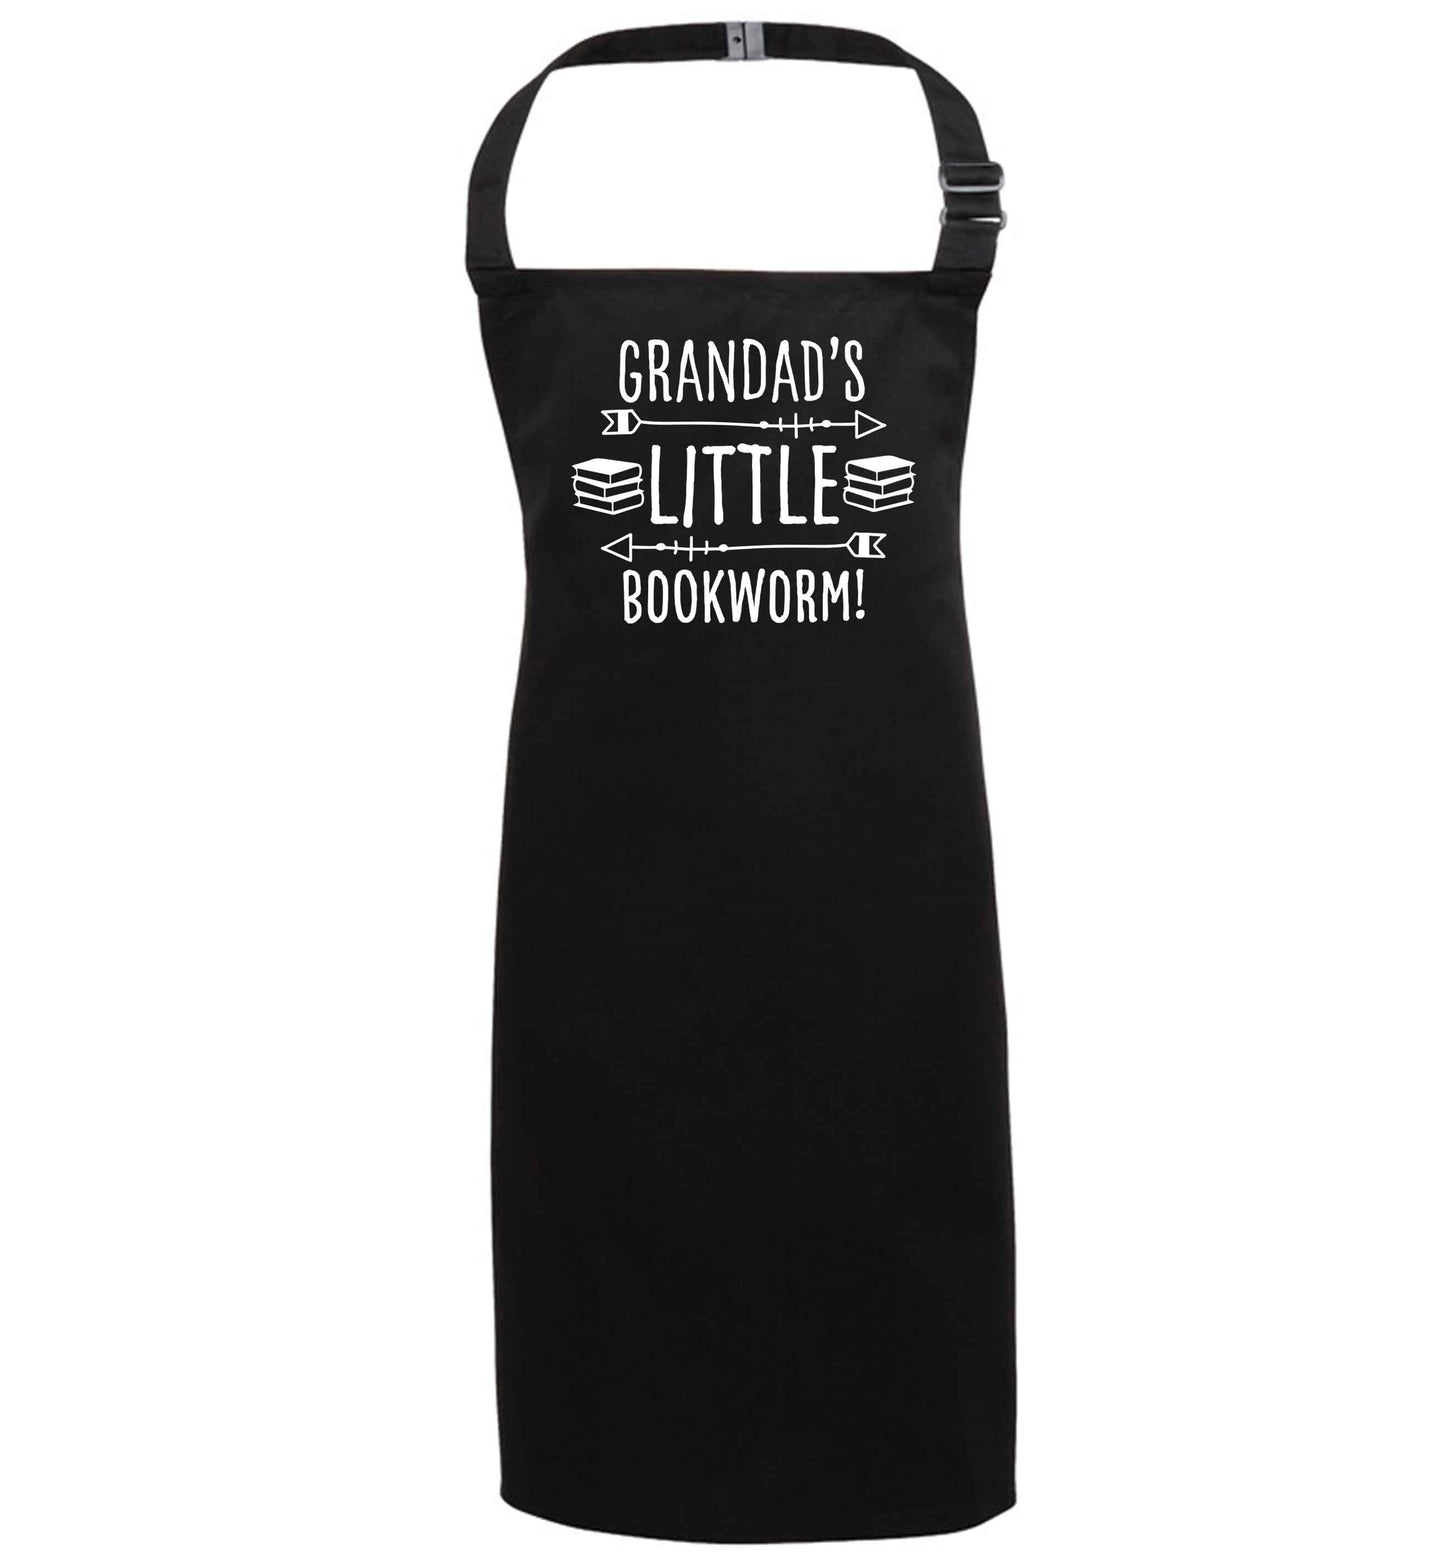 Grandad's little bookworm black apron 7-10 years